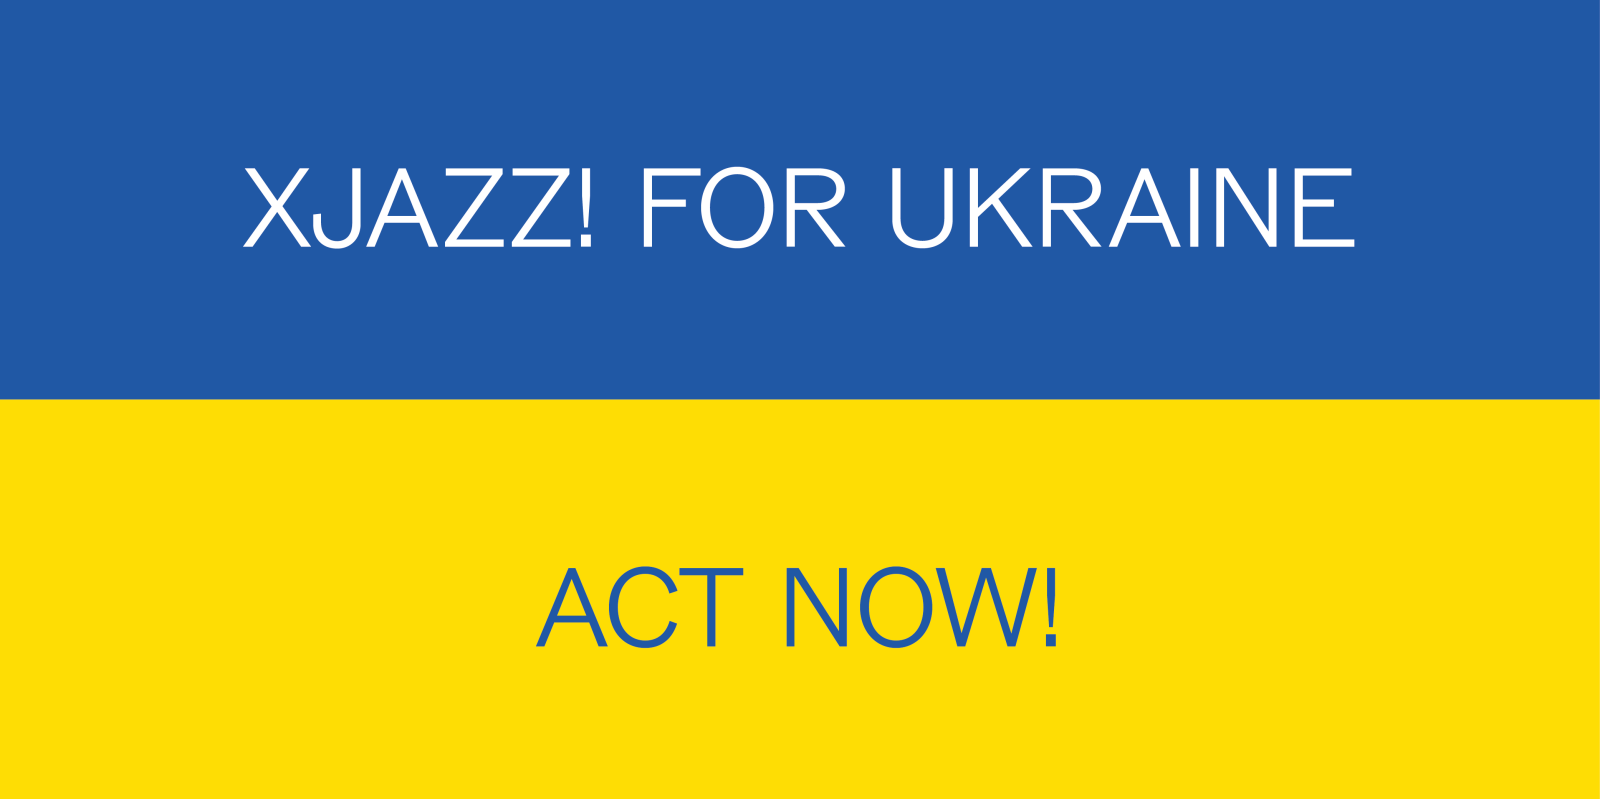 XJAZZ! FOR UKRAINE